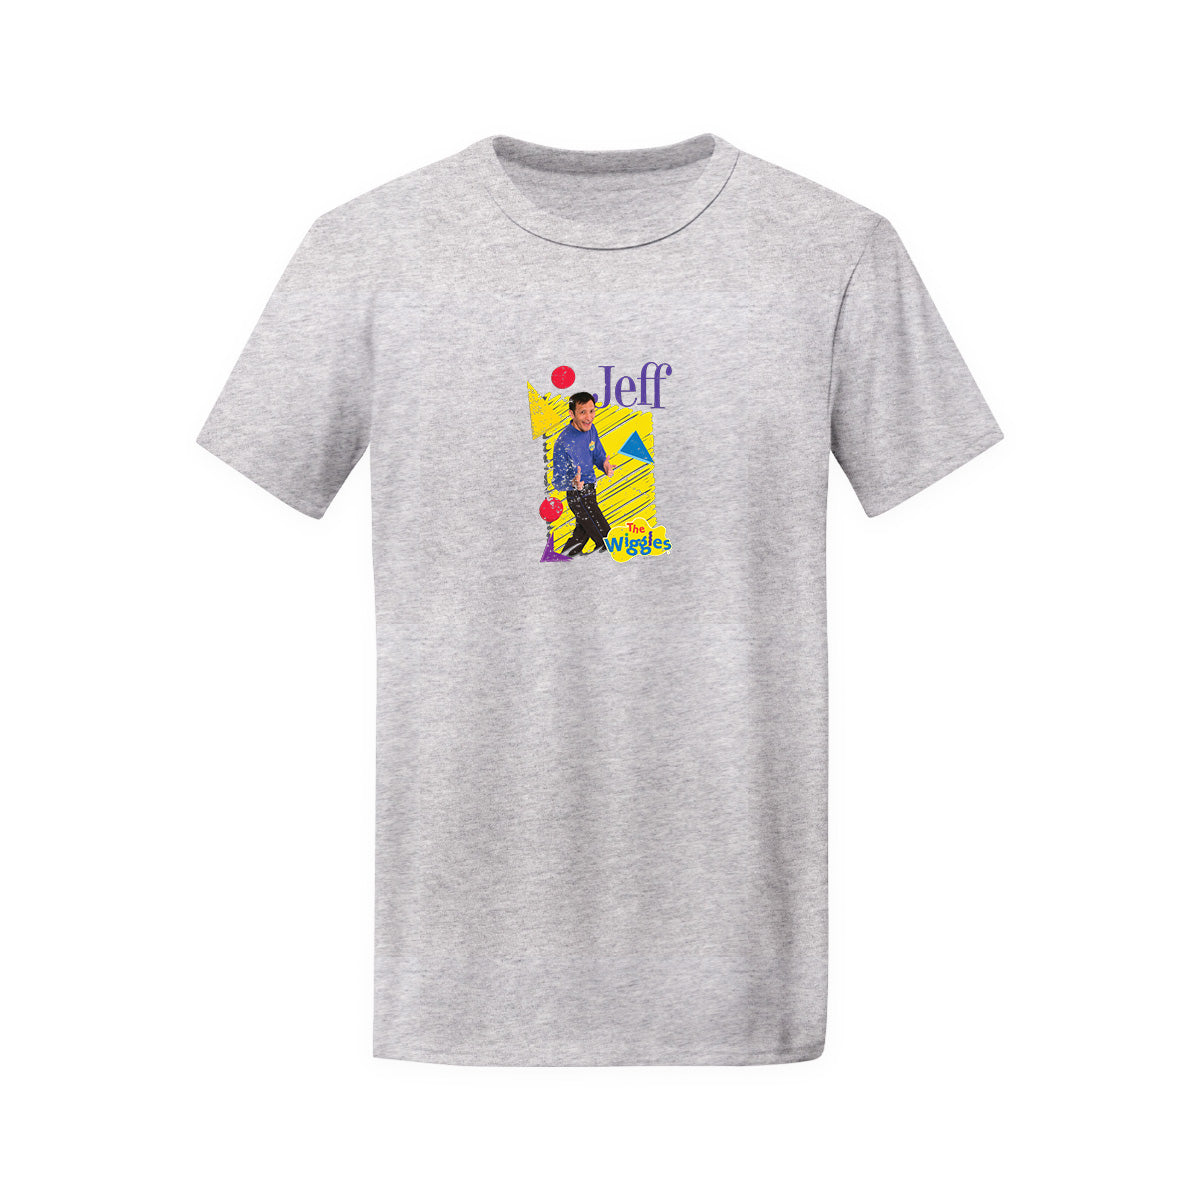 The Wiggles Adult Original Retro Short Sleeve T-shirt Jeff